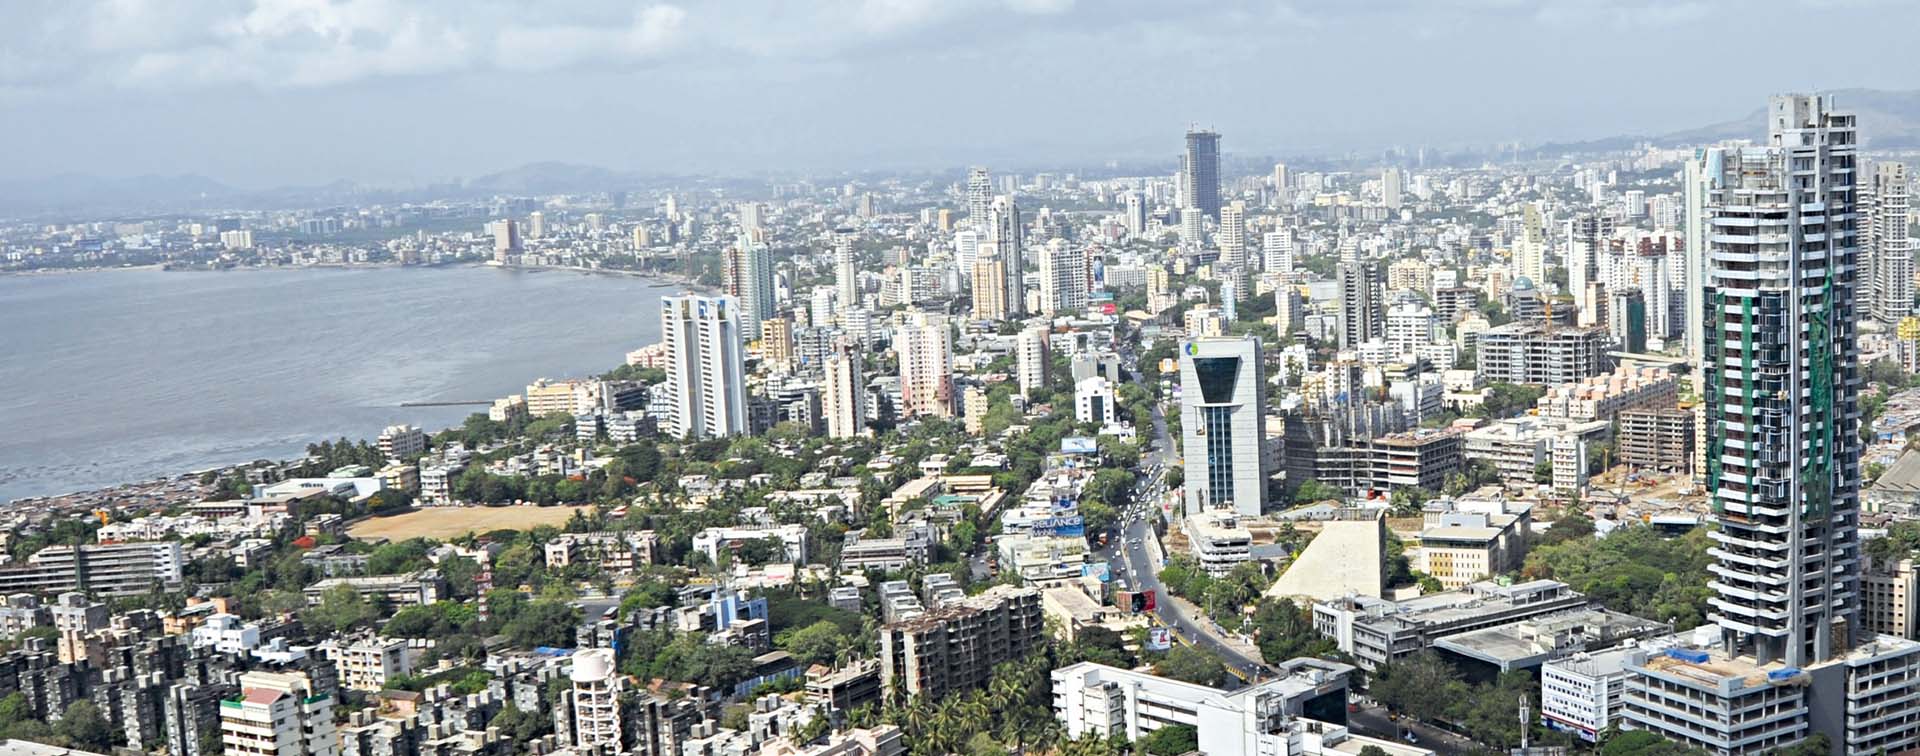 Aerial view of worli sea face at Mumbai